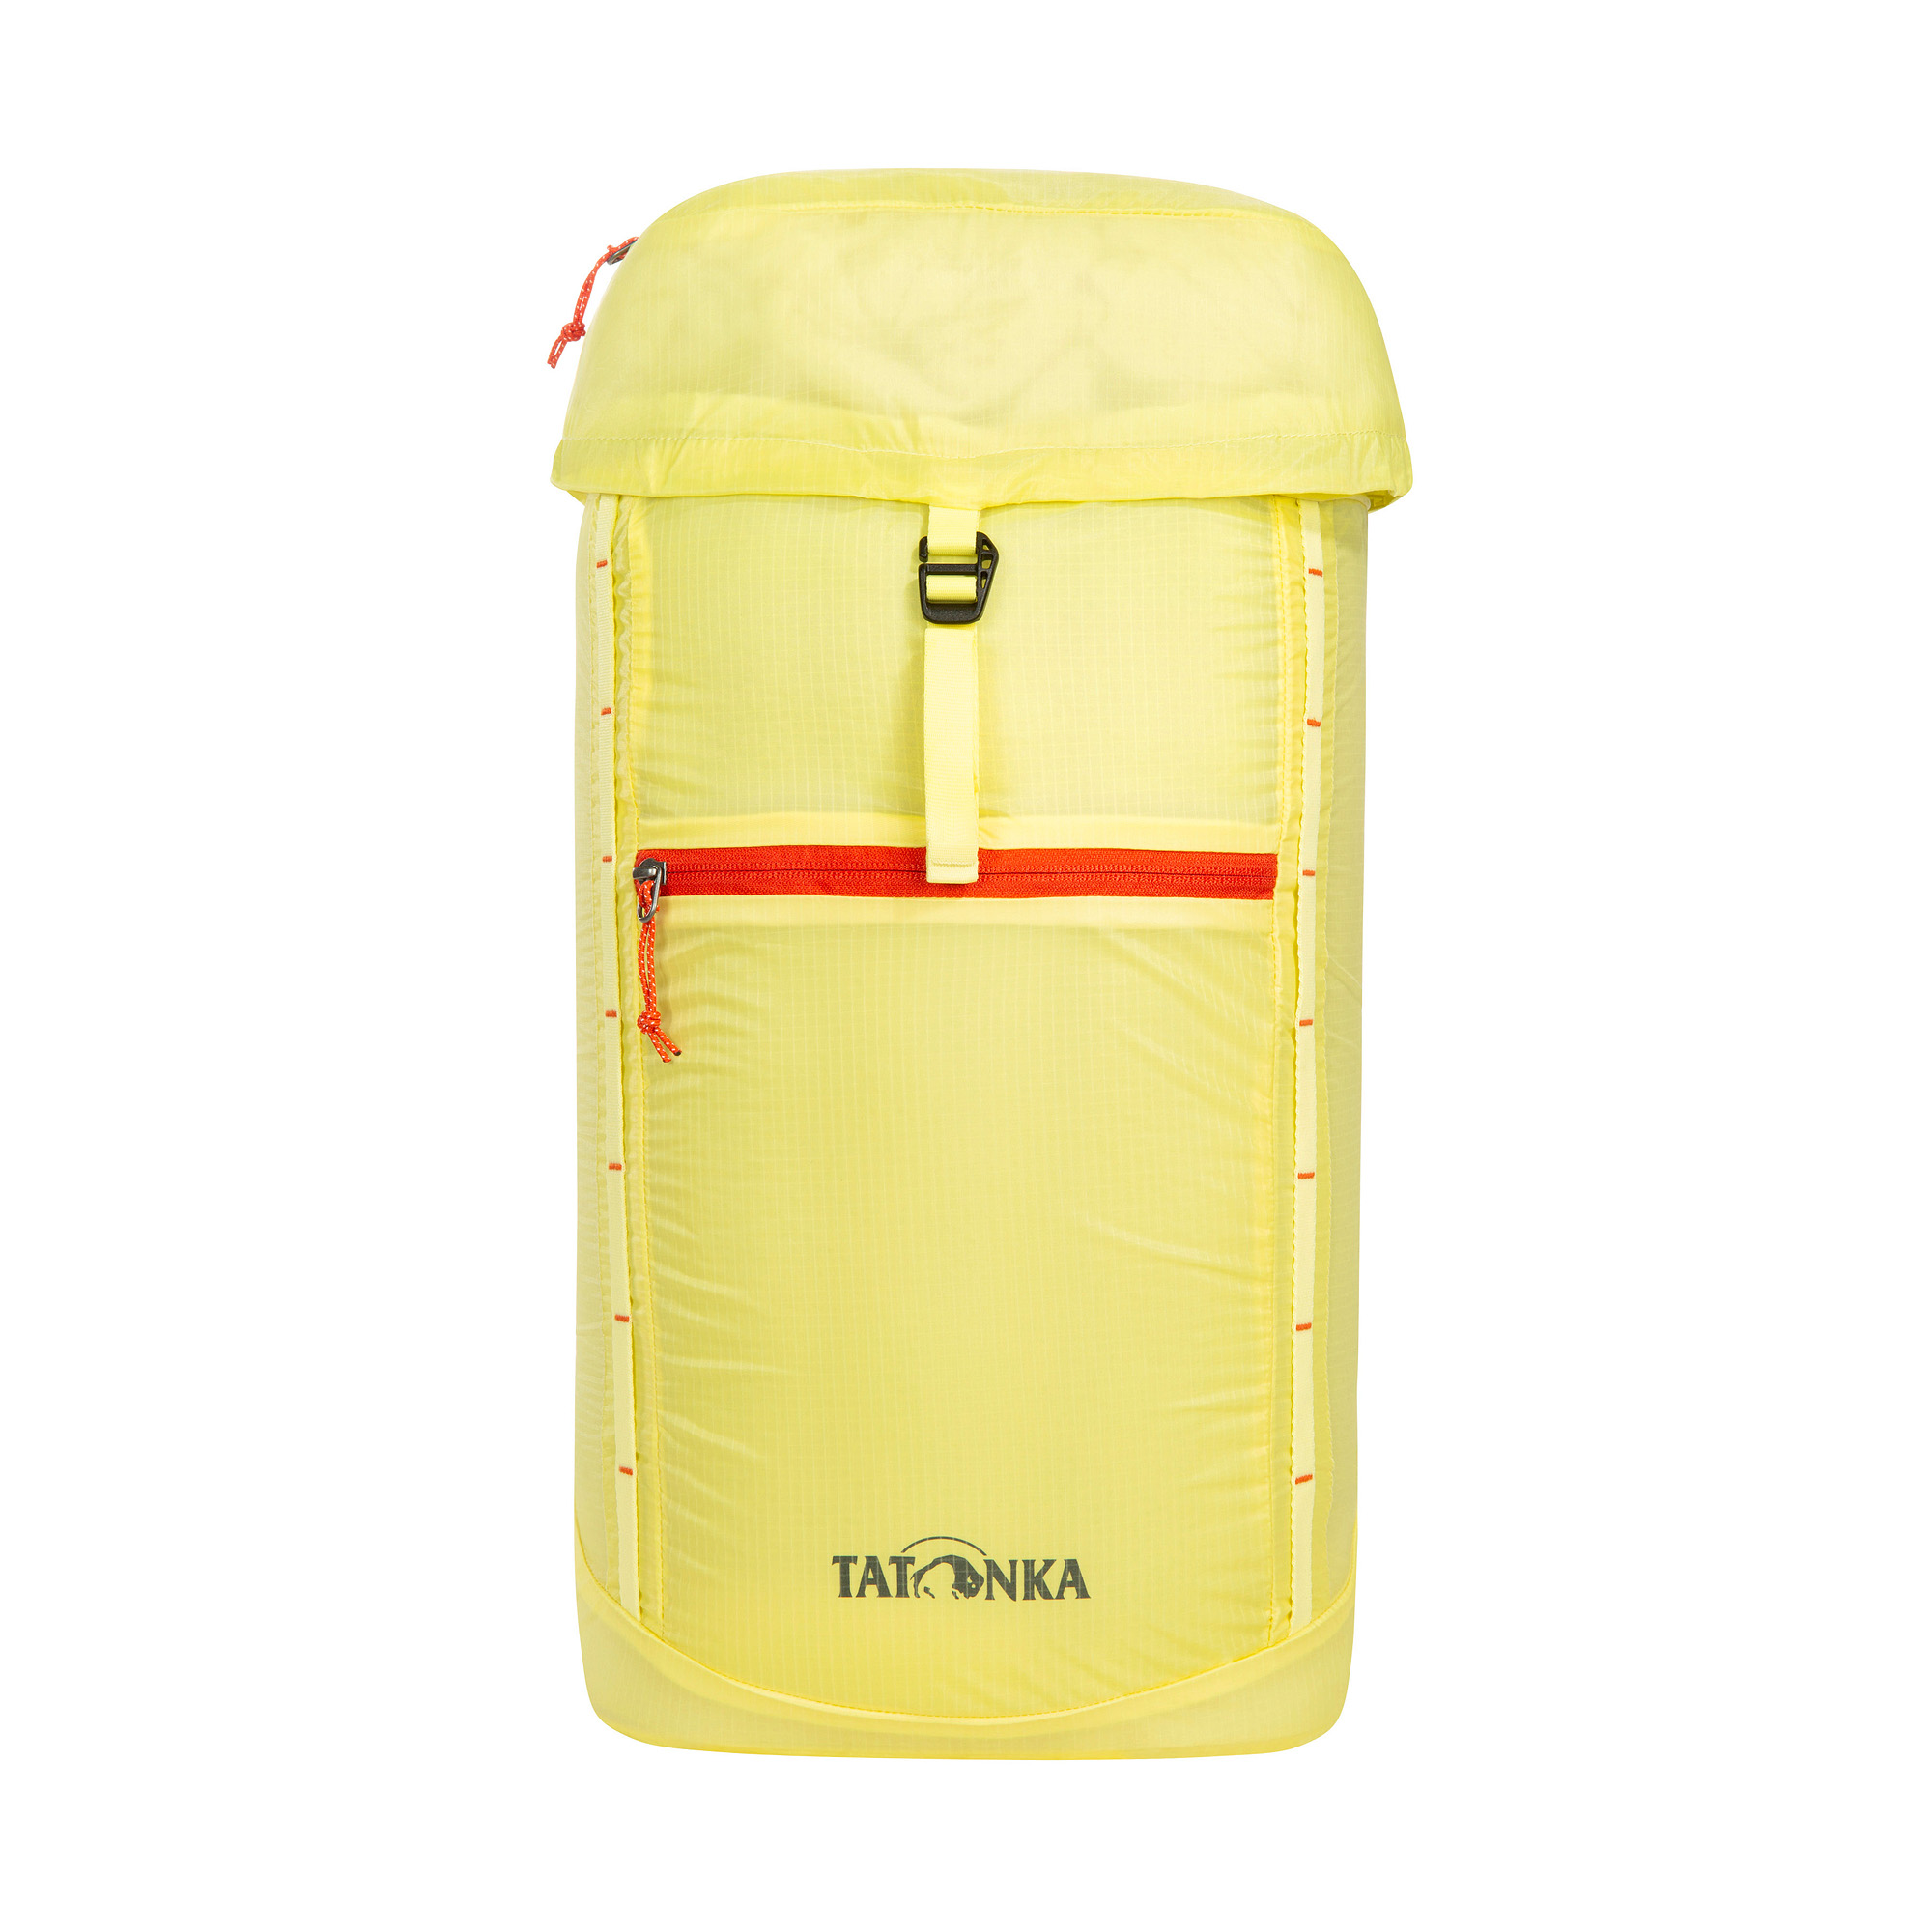 Tatonka SQZY Daypack 2in1 light yellow gelb Tagesrucksäcke 4013236333961